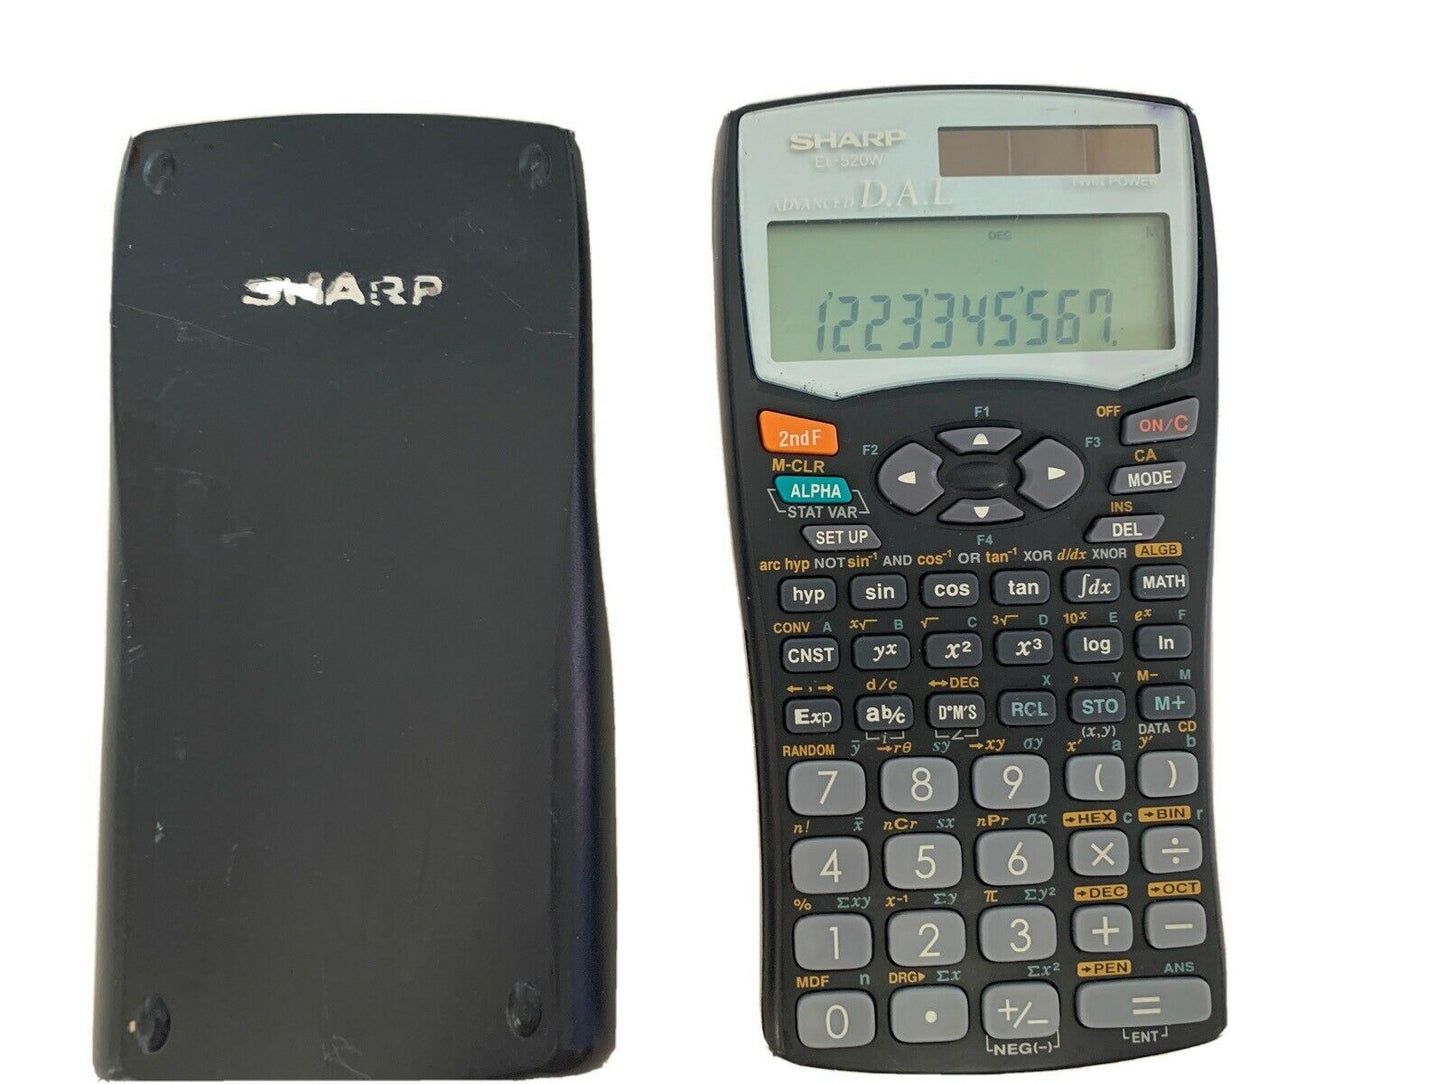 Sharp EL-520W Solar Twin Powered Advanced D.A.L Scientific Calculator